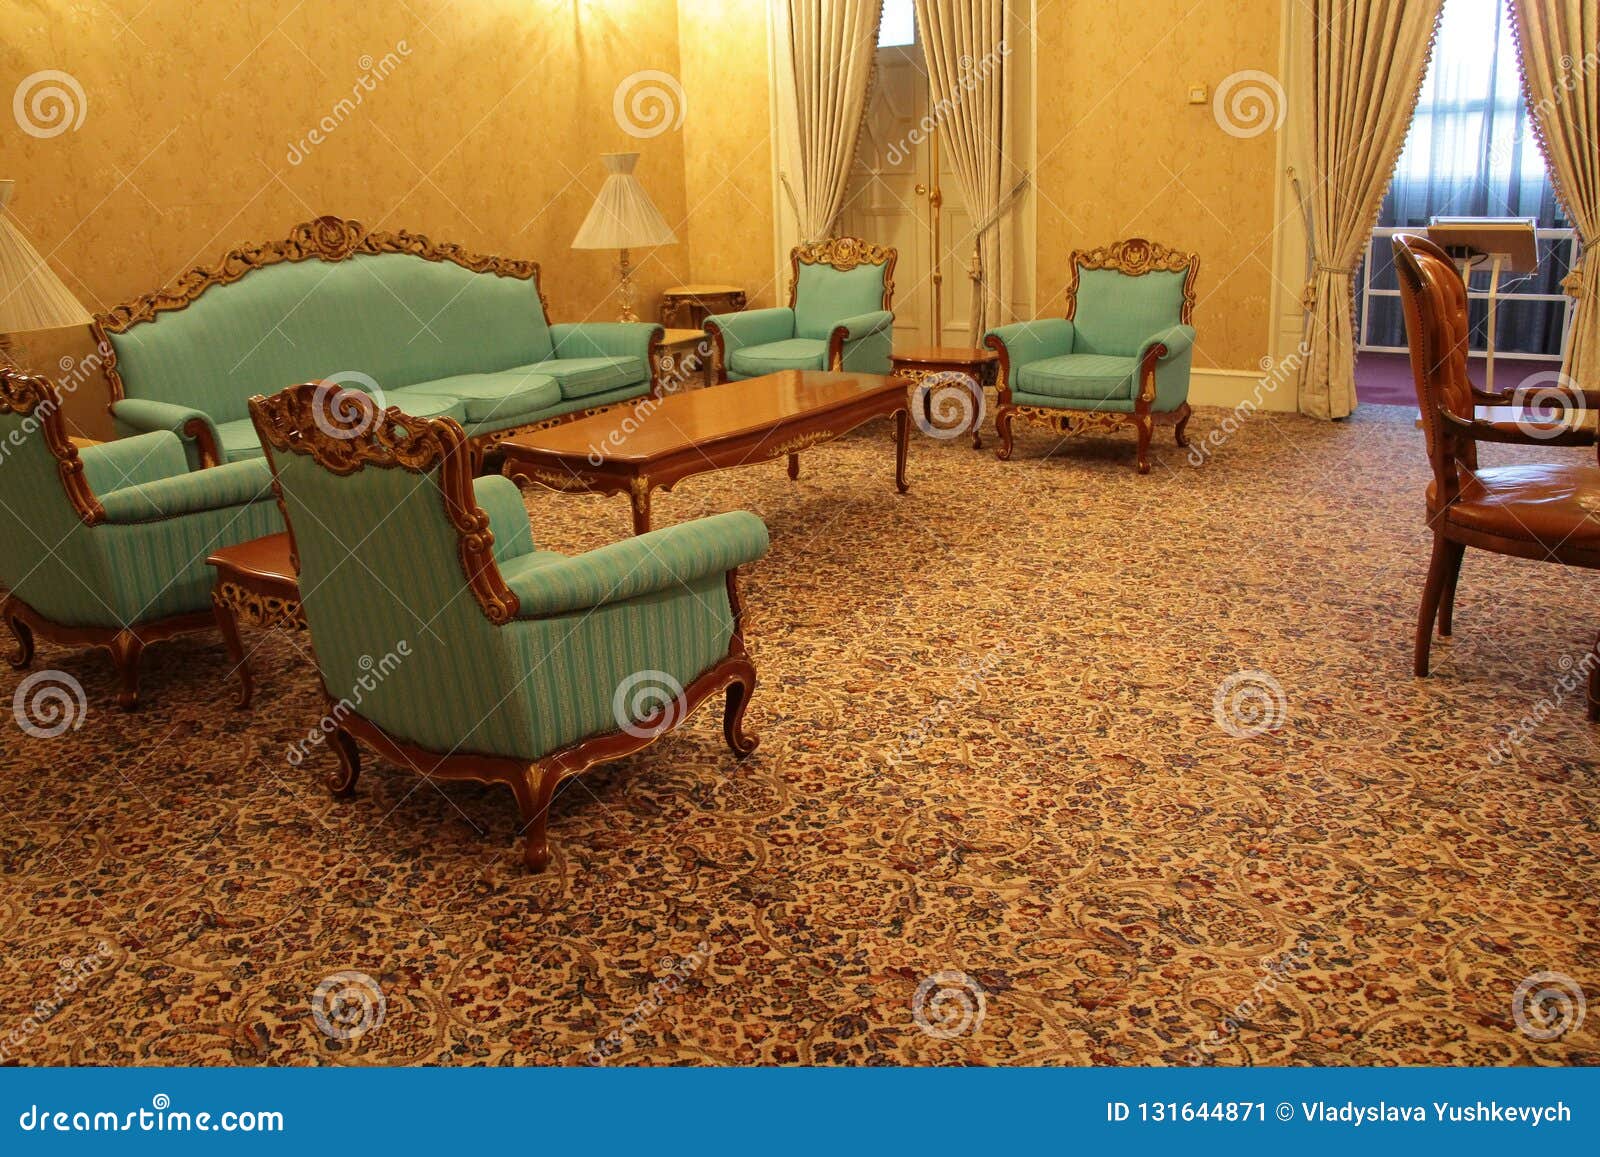 Classical Interior. Hall In A Classic Style. Istana Negara ...